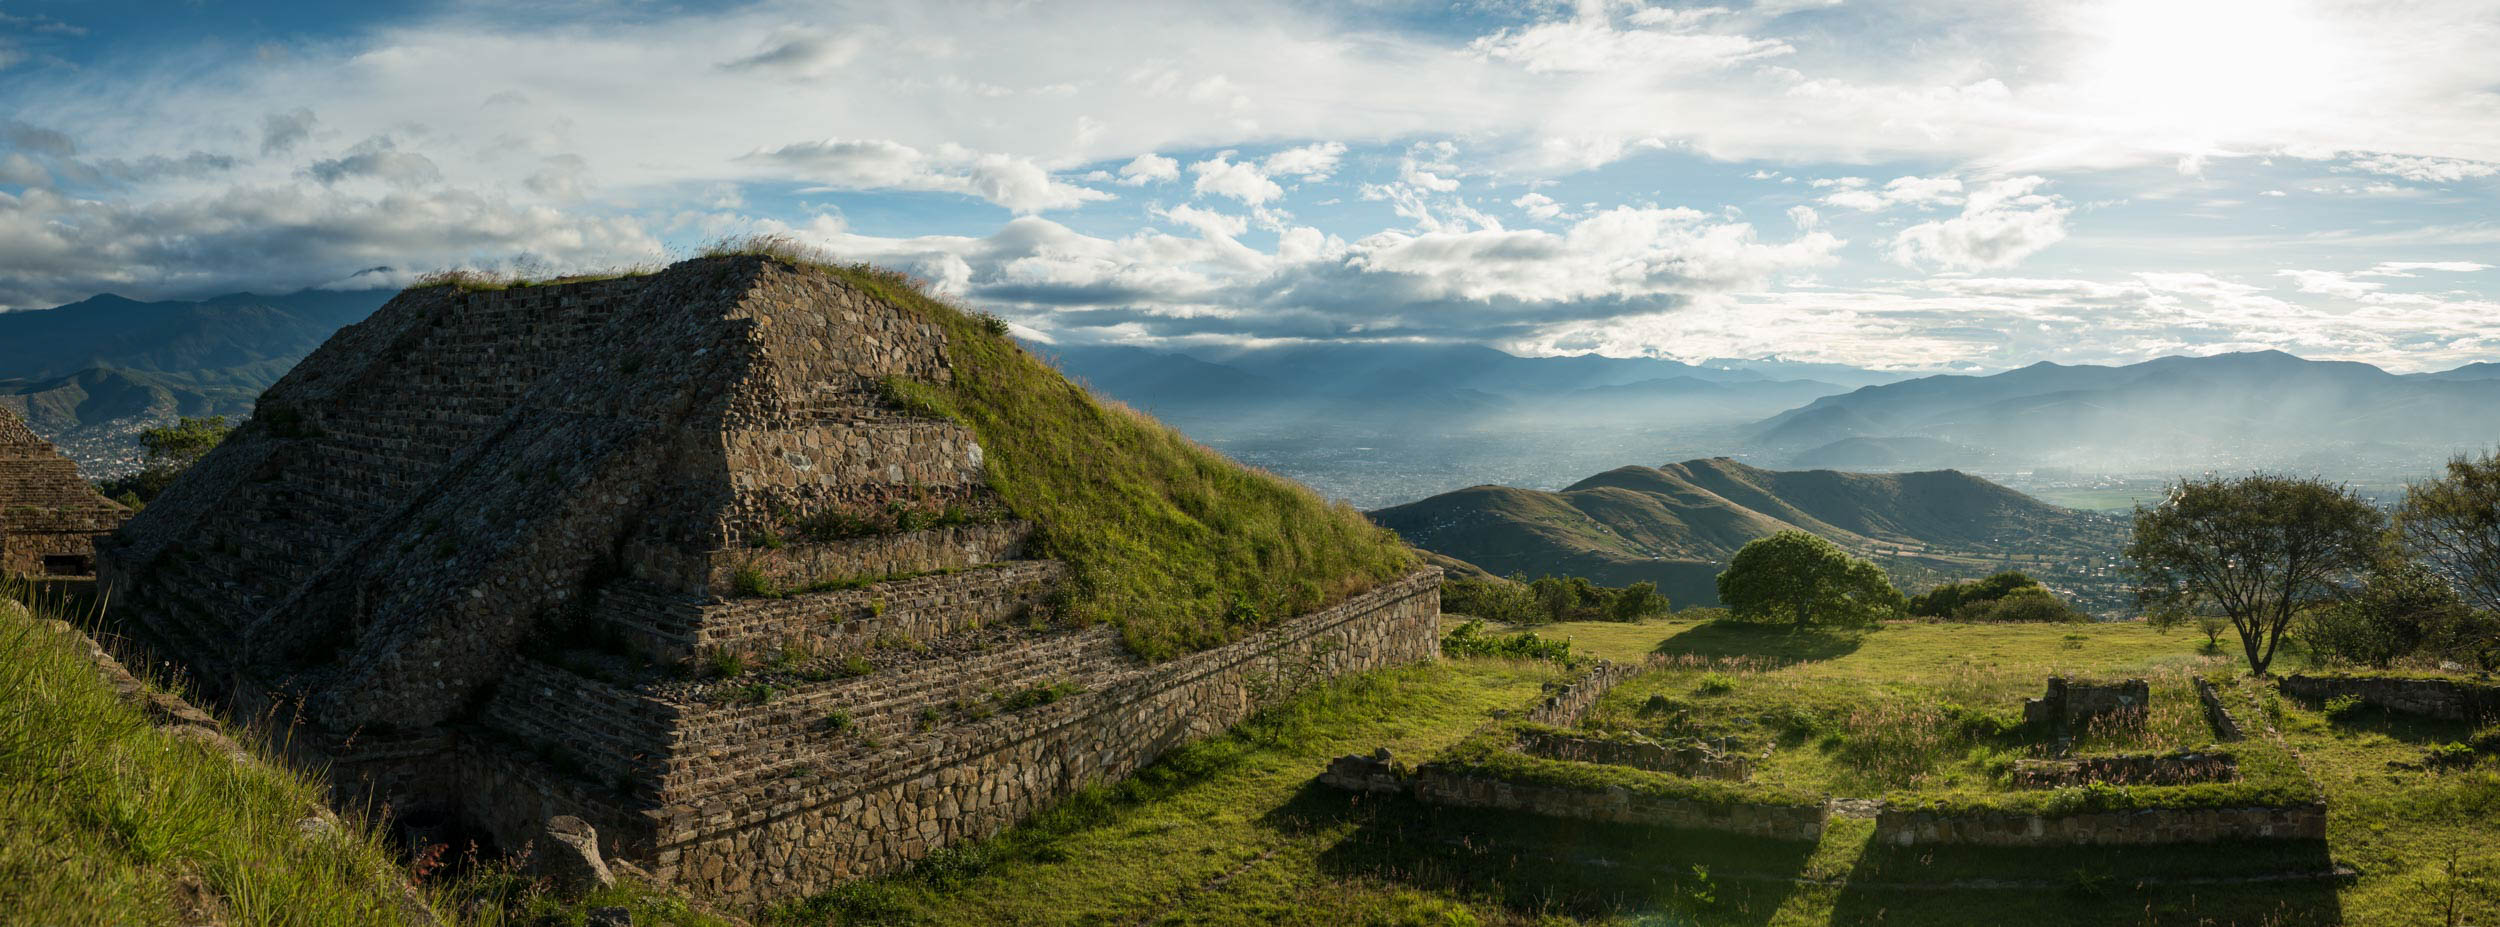 monte-alban-oaxaca-aztec-ancient-ruins-history-mexico